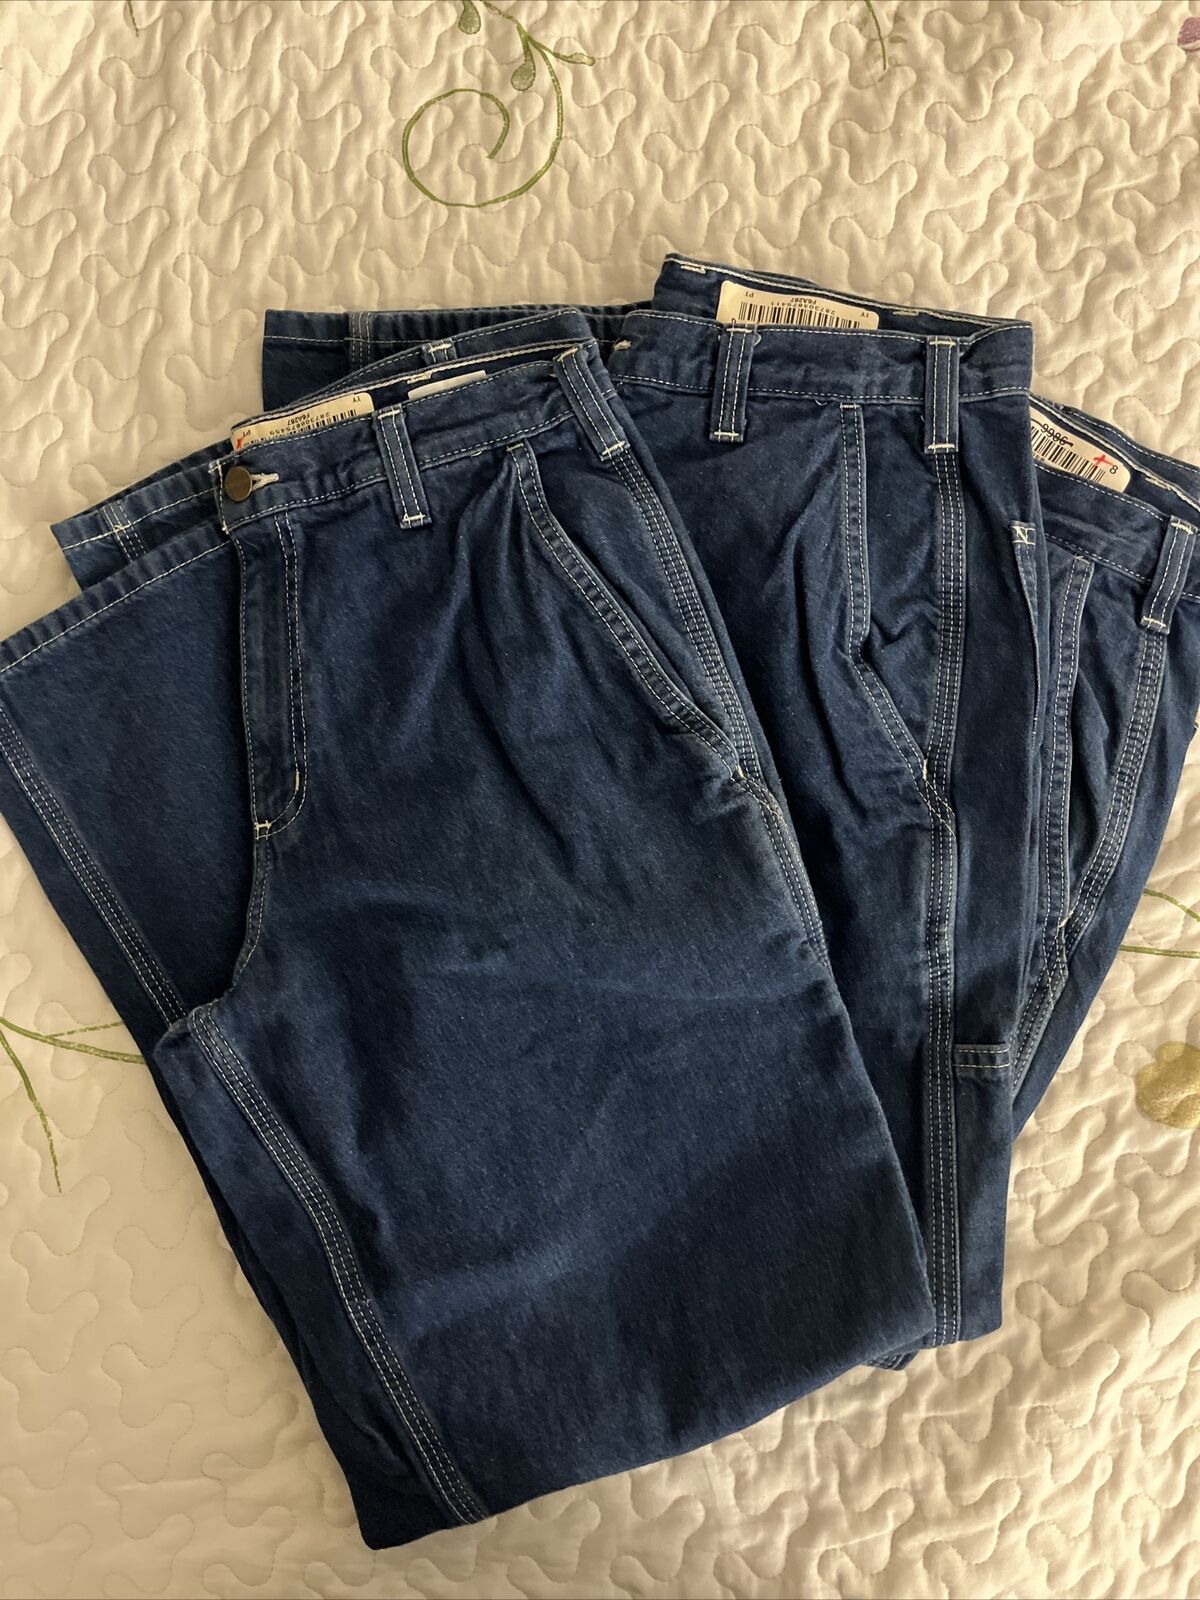 CARHARTT MENS 30 x 30 - 382-83 Unlined Denim Dungaree Fit Work Jeans Pants